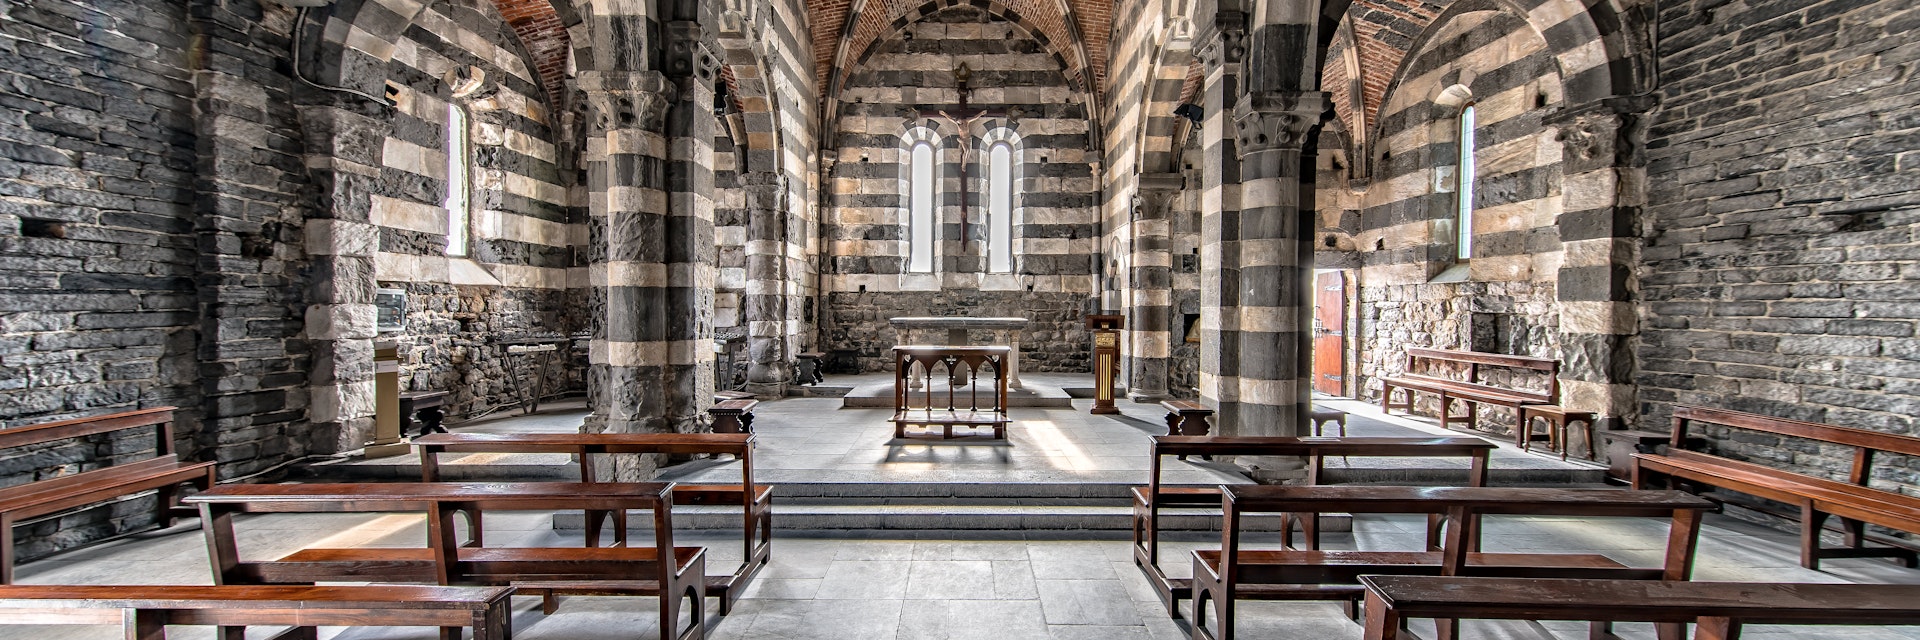 Inside San Pietro church in Portovenere.
